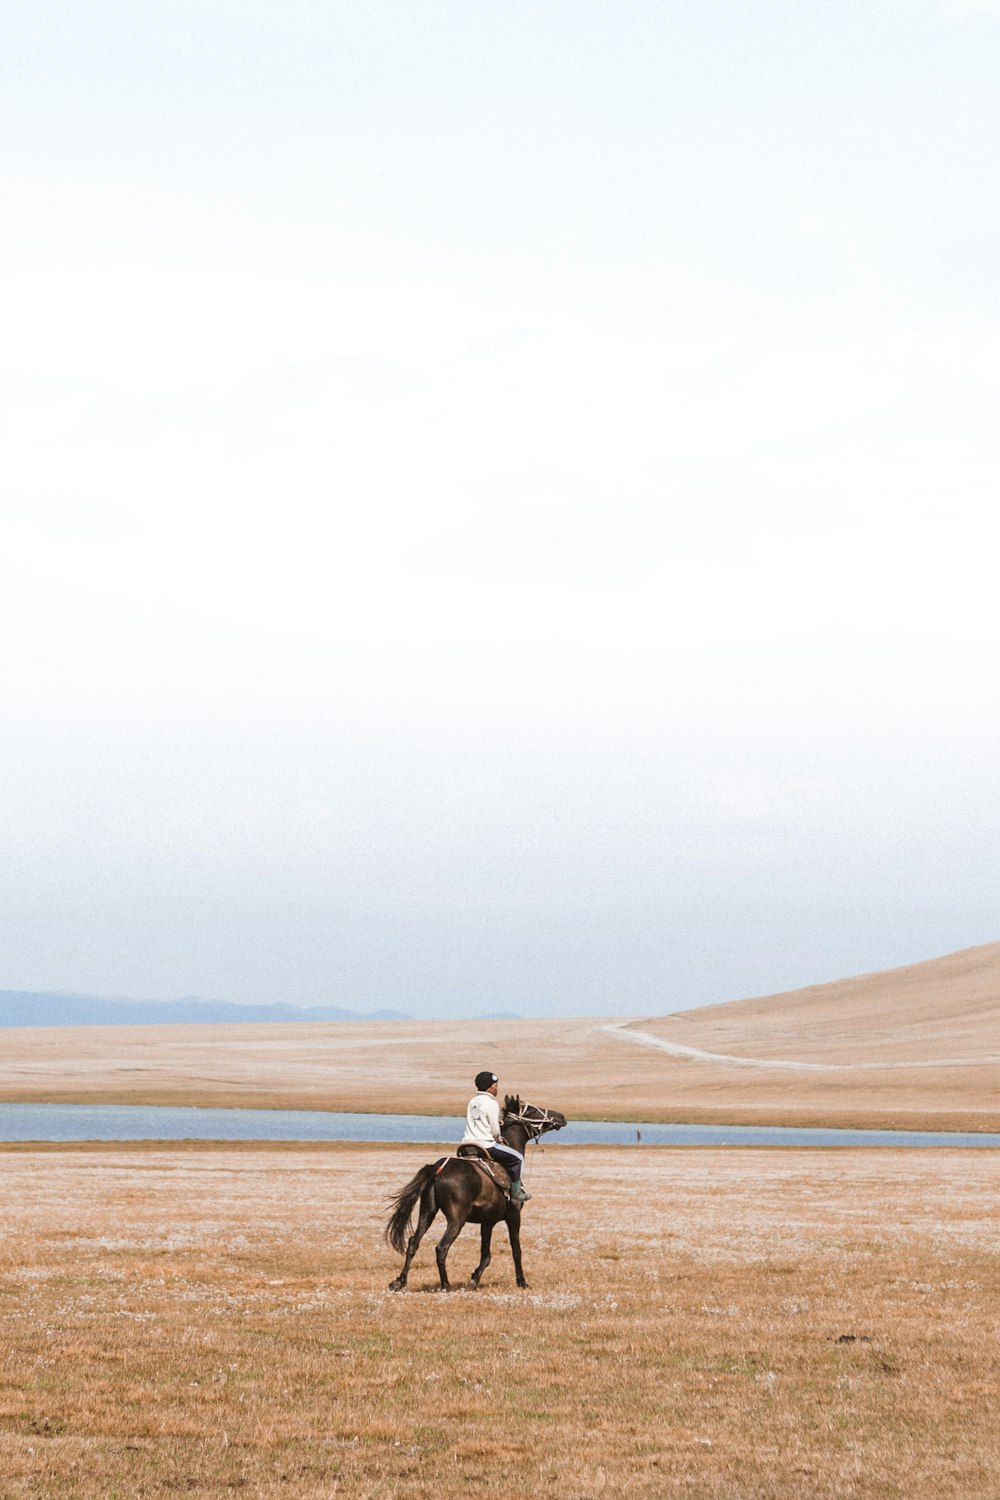 man riding horse on grass field